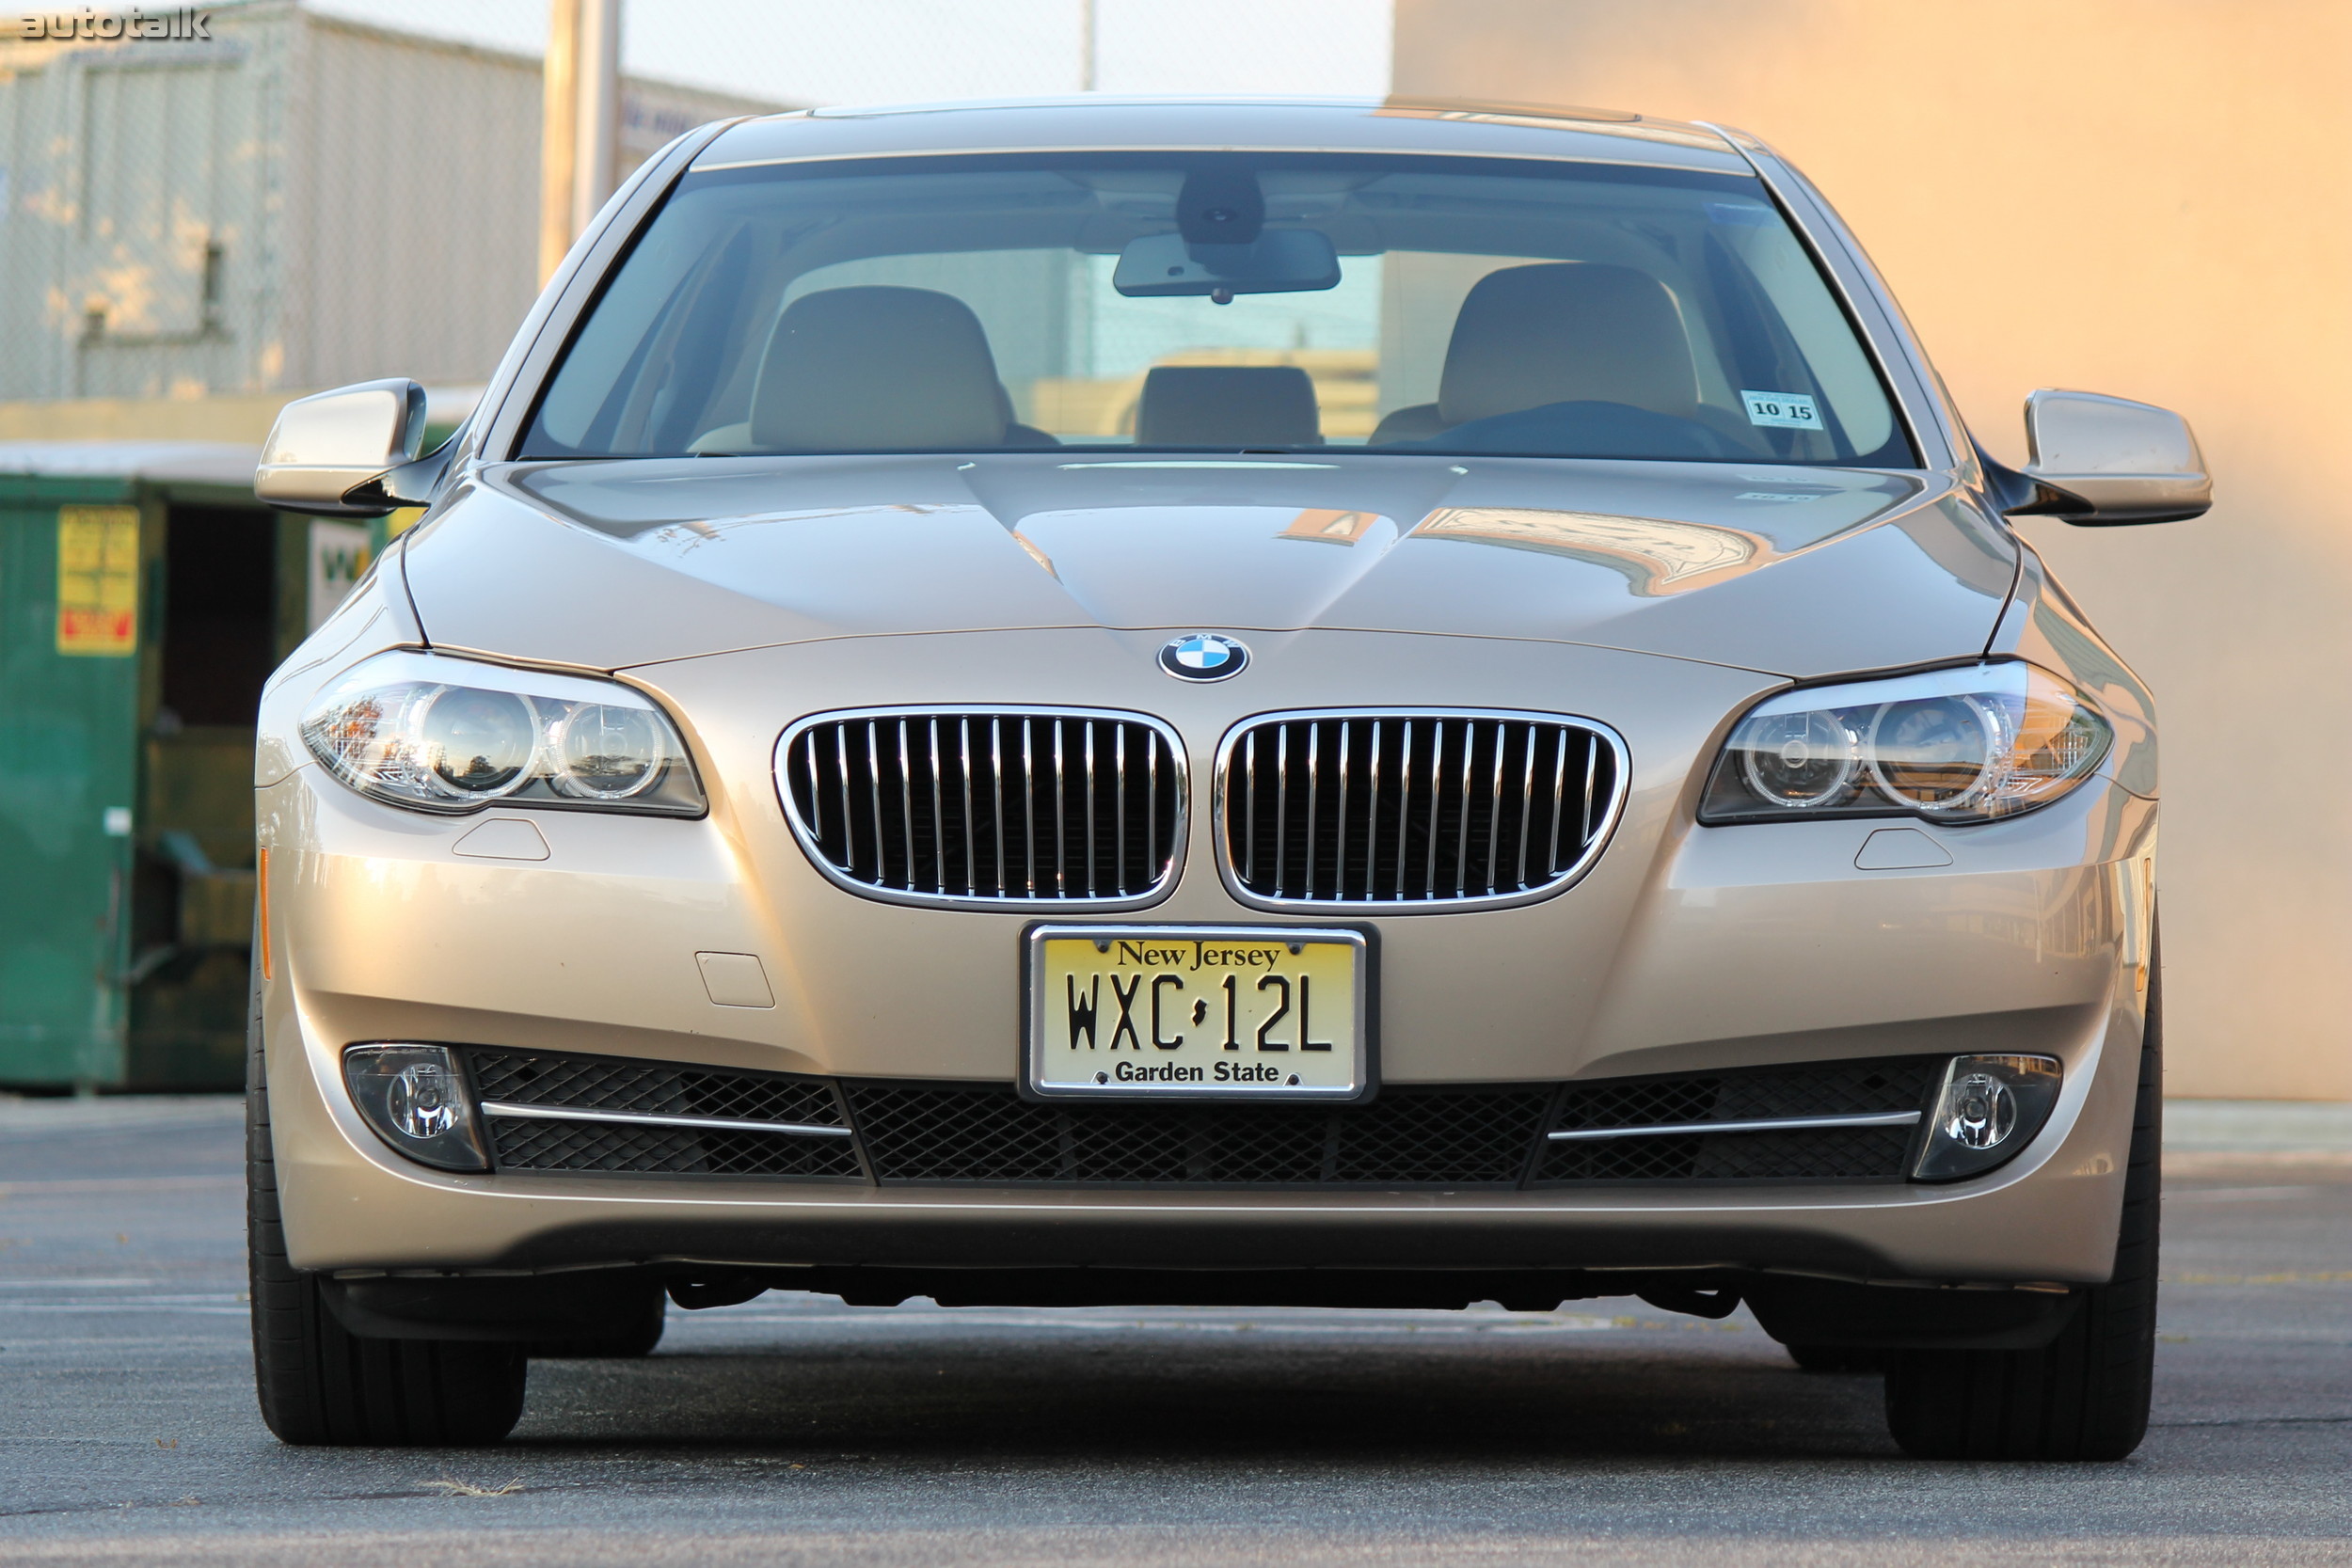 2011 BMW 528i Review